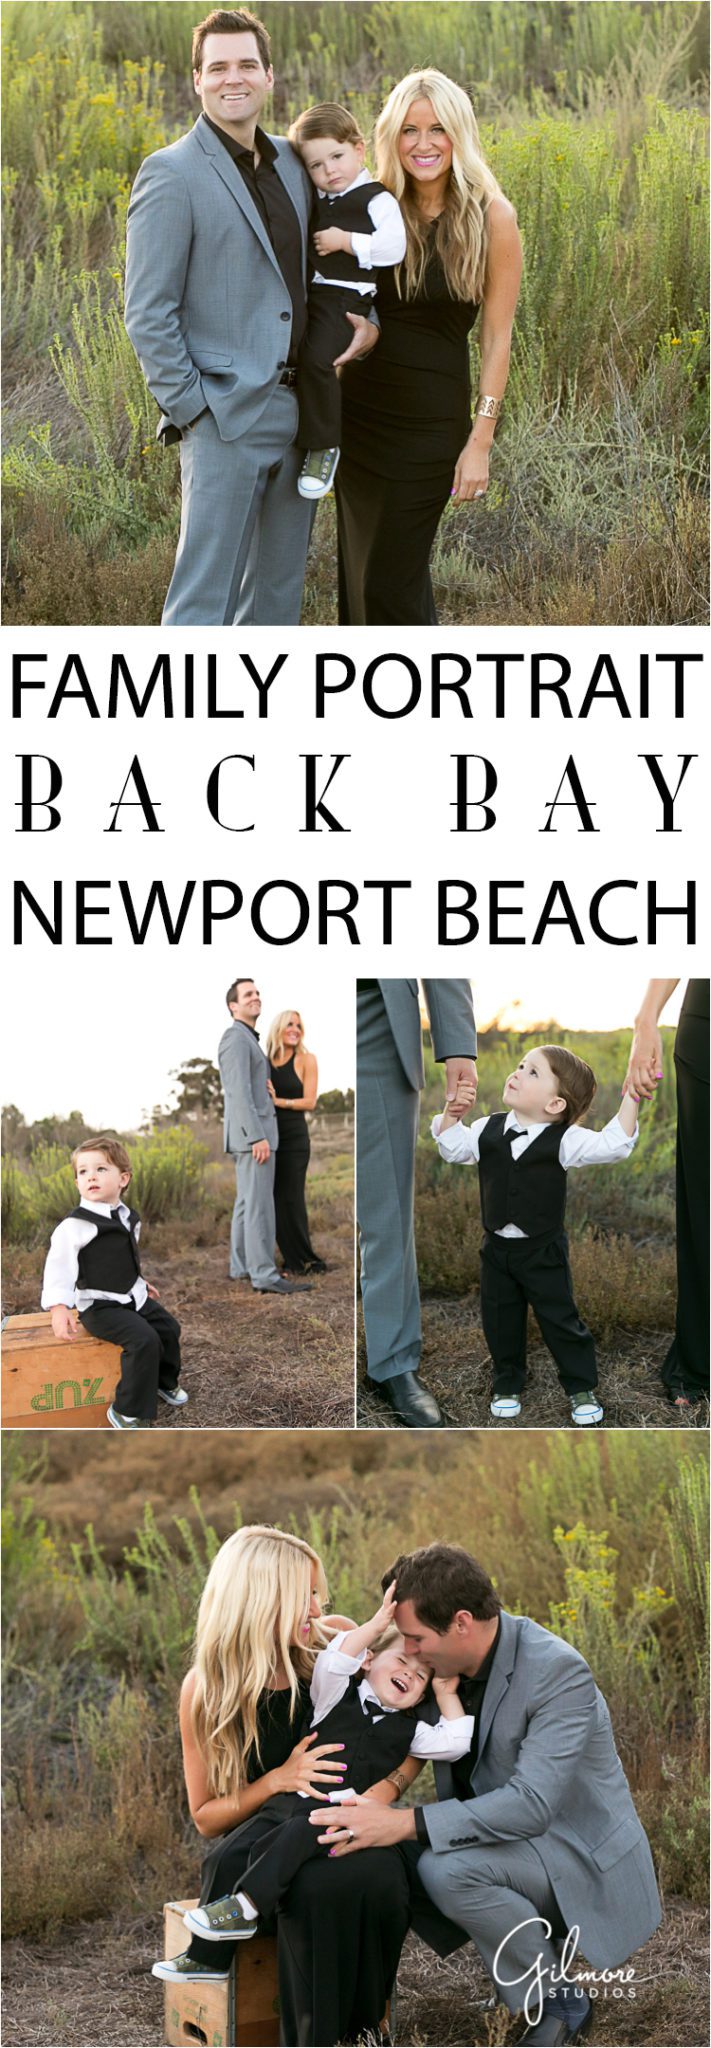 Newport Beach Back Bay family portrait photographers in Orange County